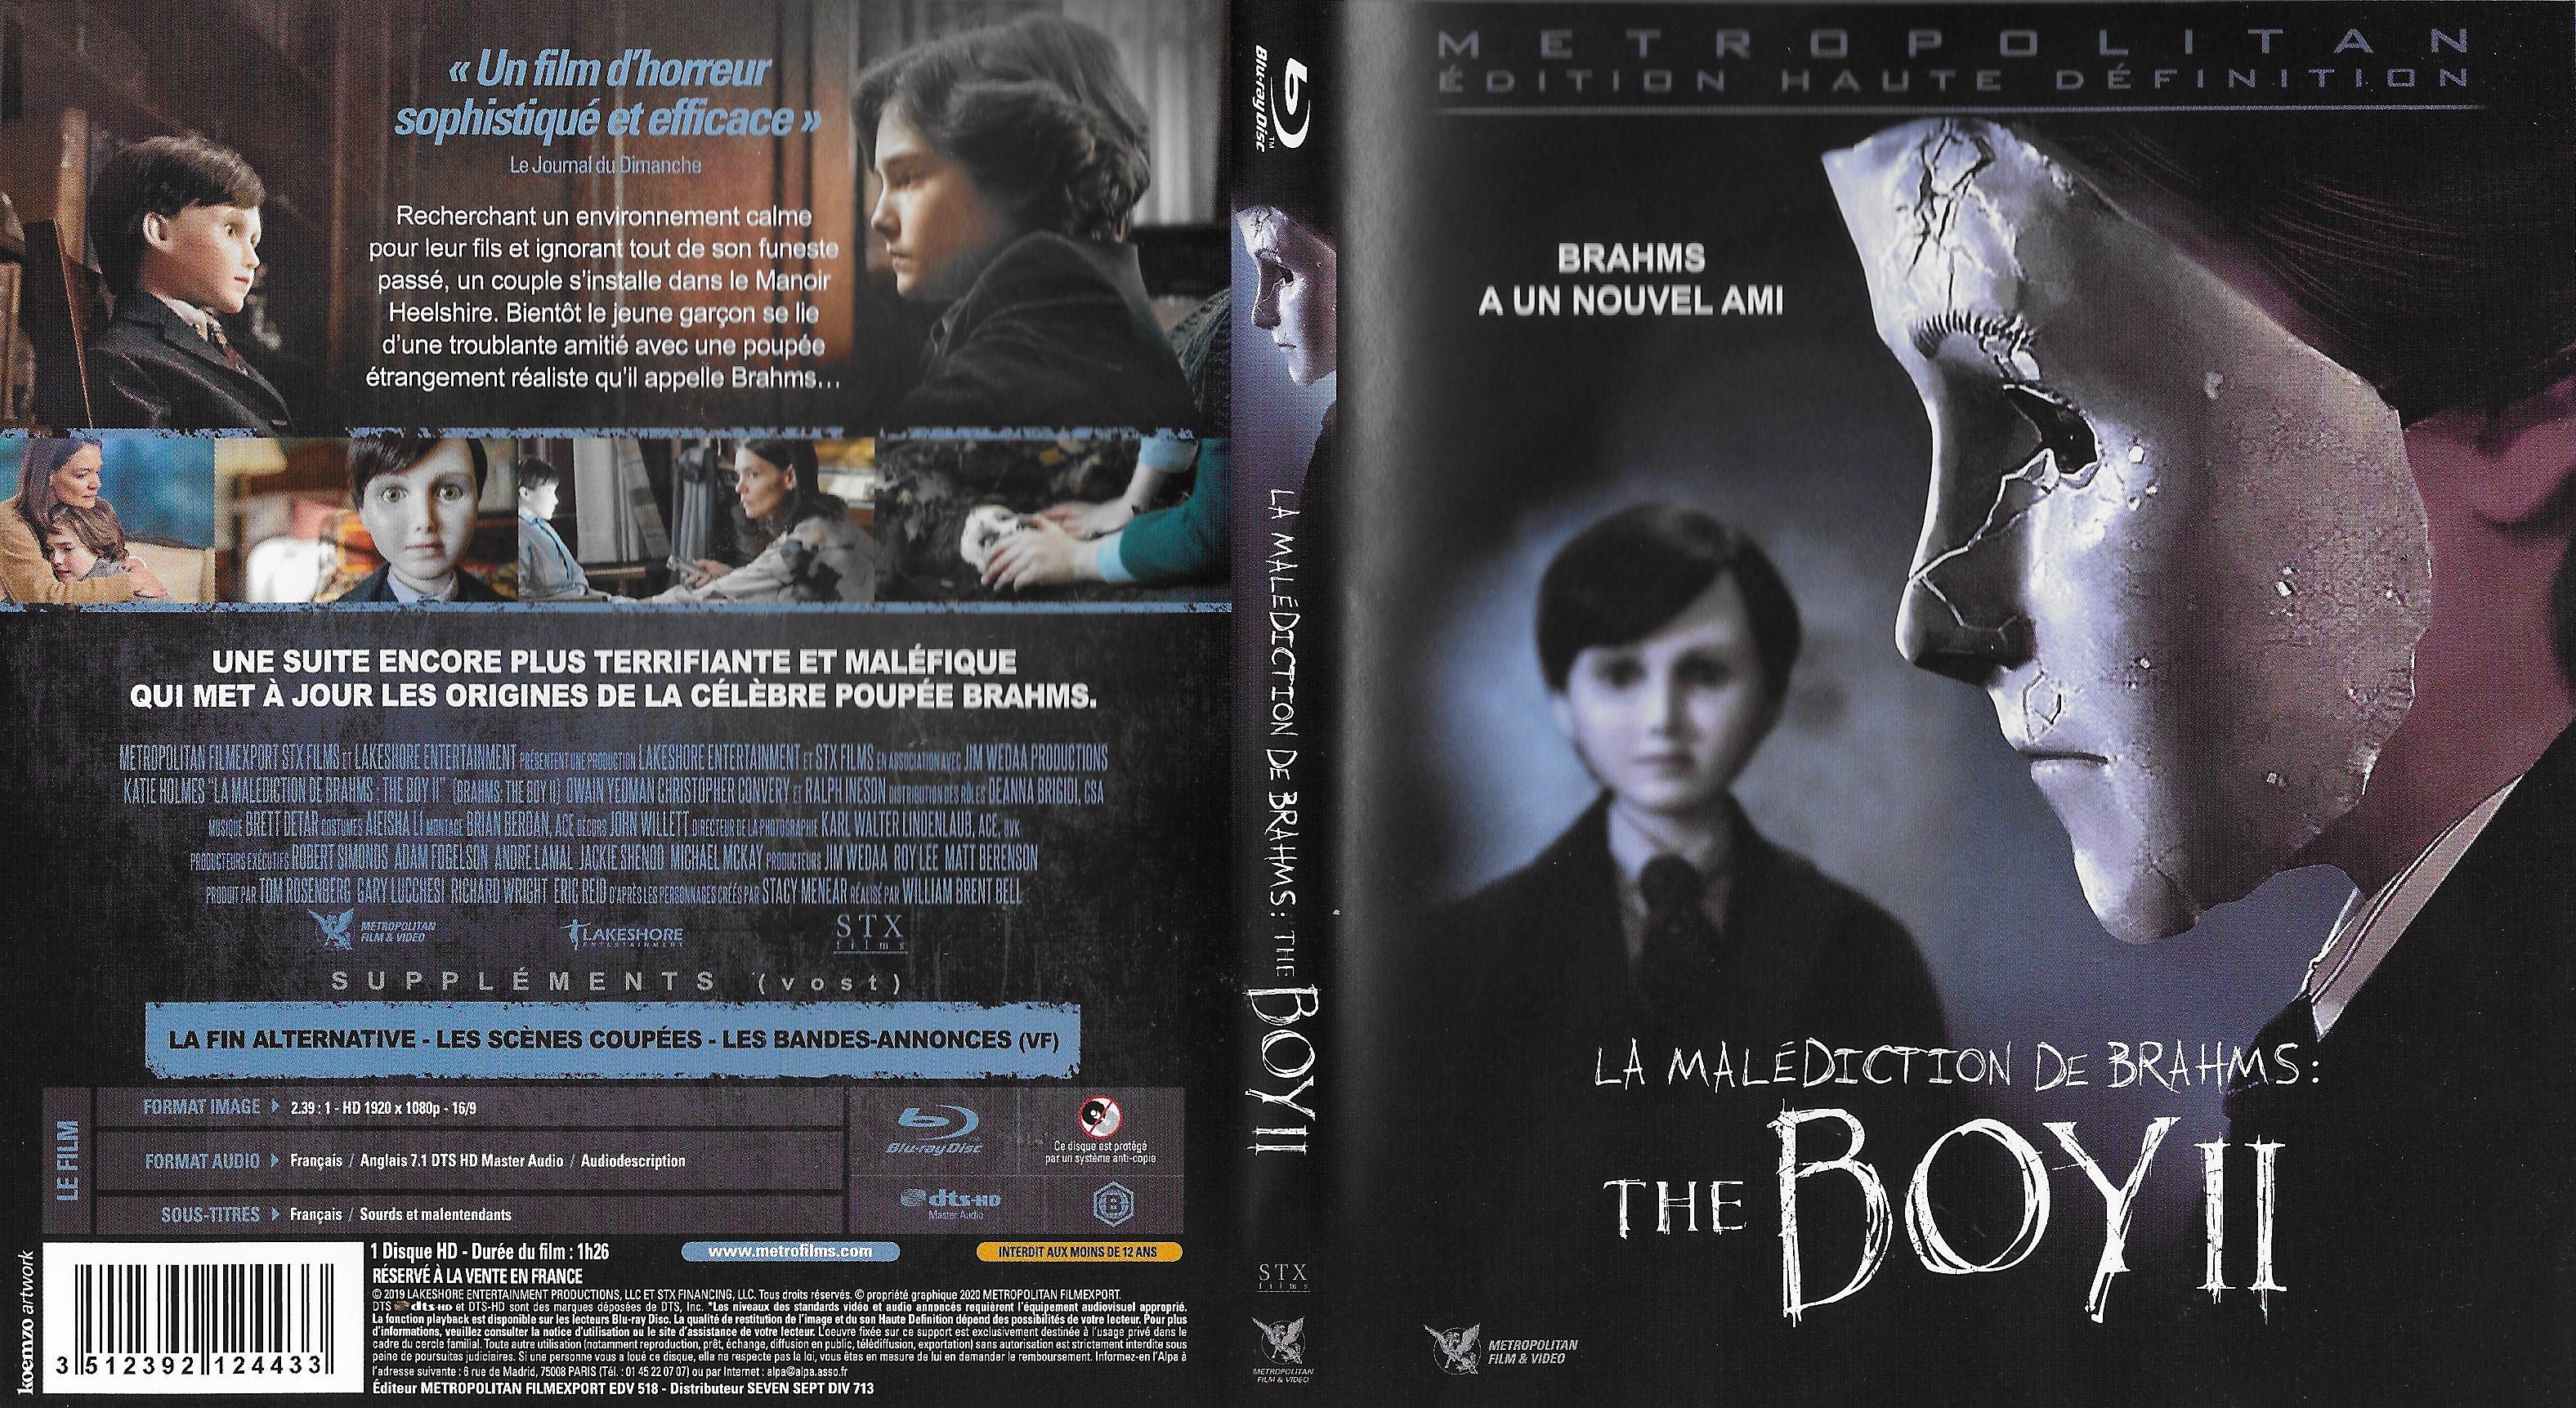 Jaquette DVD La malediction de Brahams -  the boy II